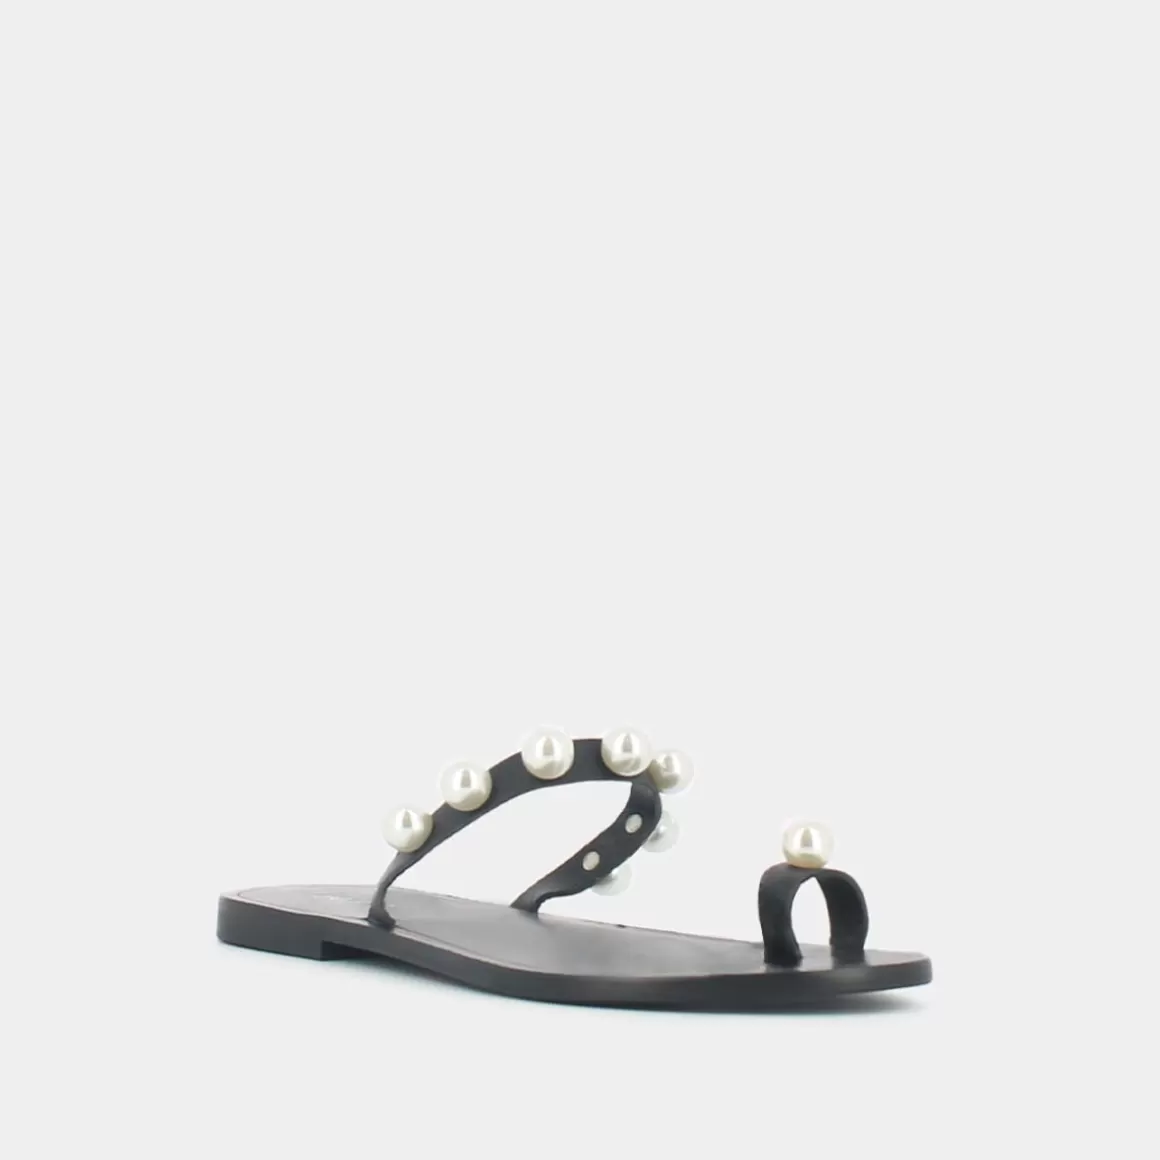 Beaded sandals<Jonak Fashion